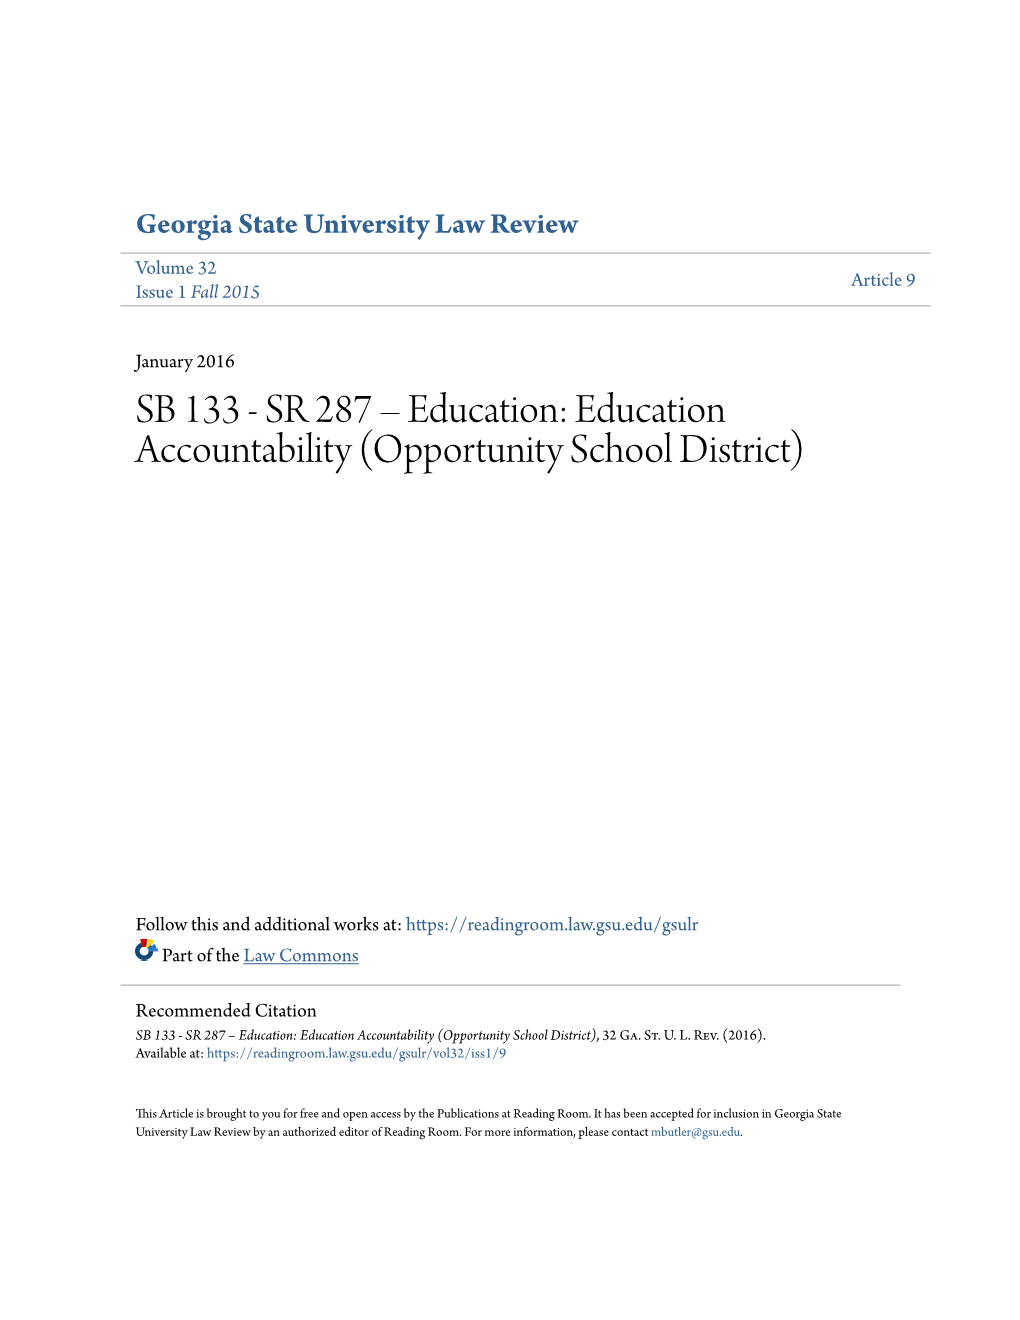 SB 133 - SR 287 – Education: Education Accountability (Opportunity School District)